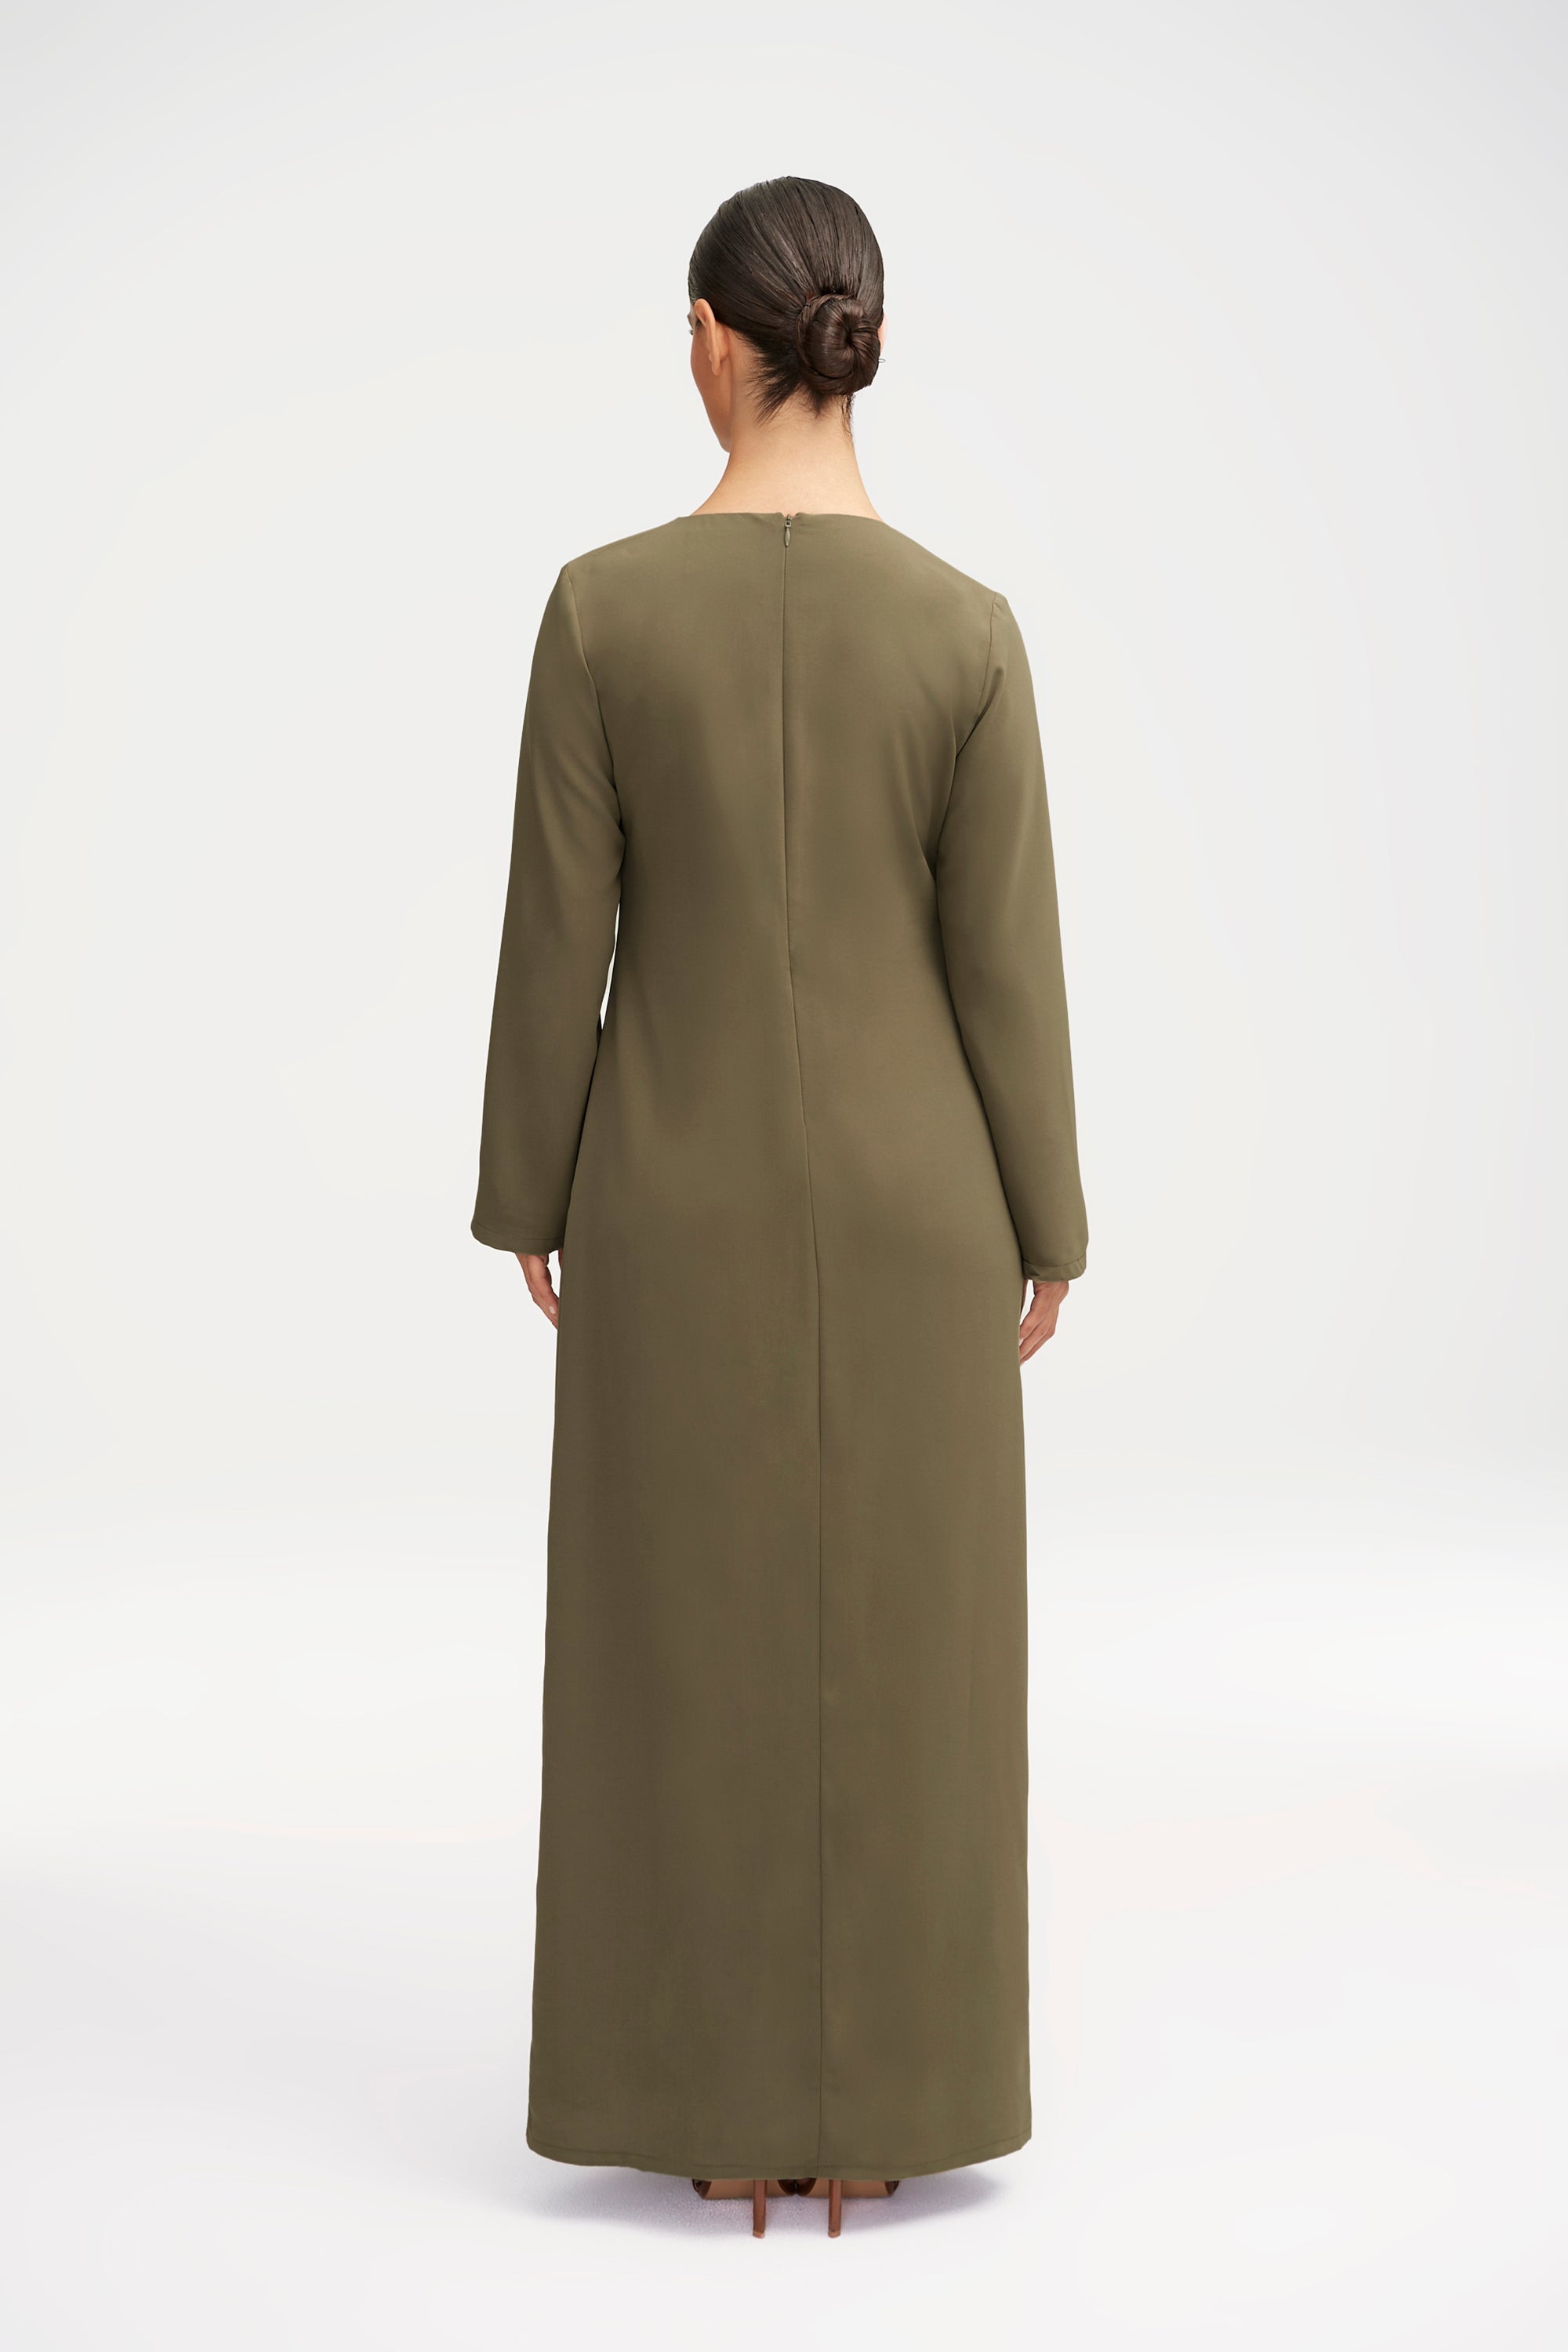 Essential Basic Maxi Dress - Dark Cactus Clothing Veiled 